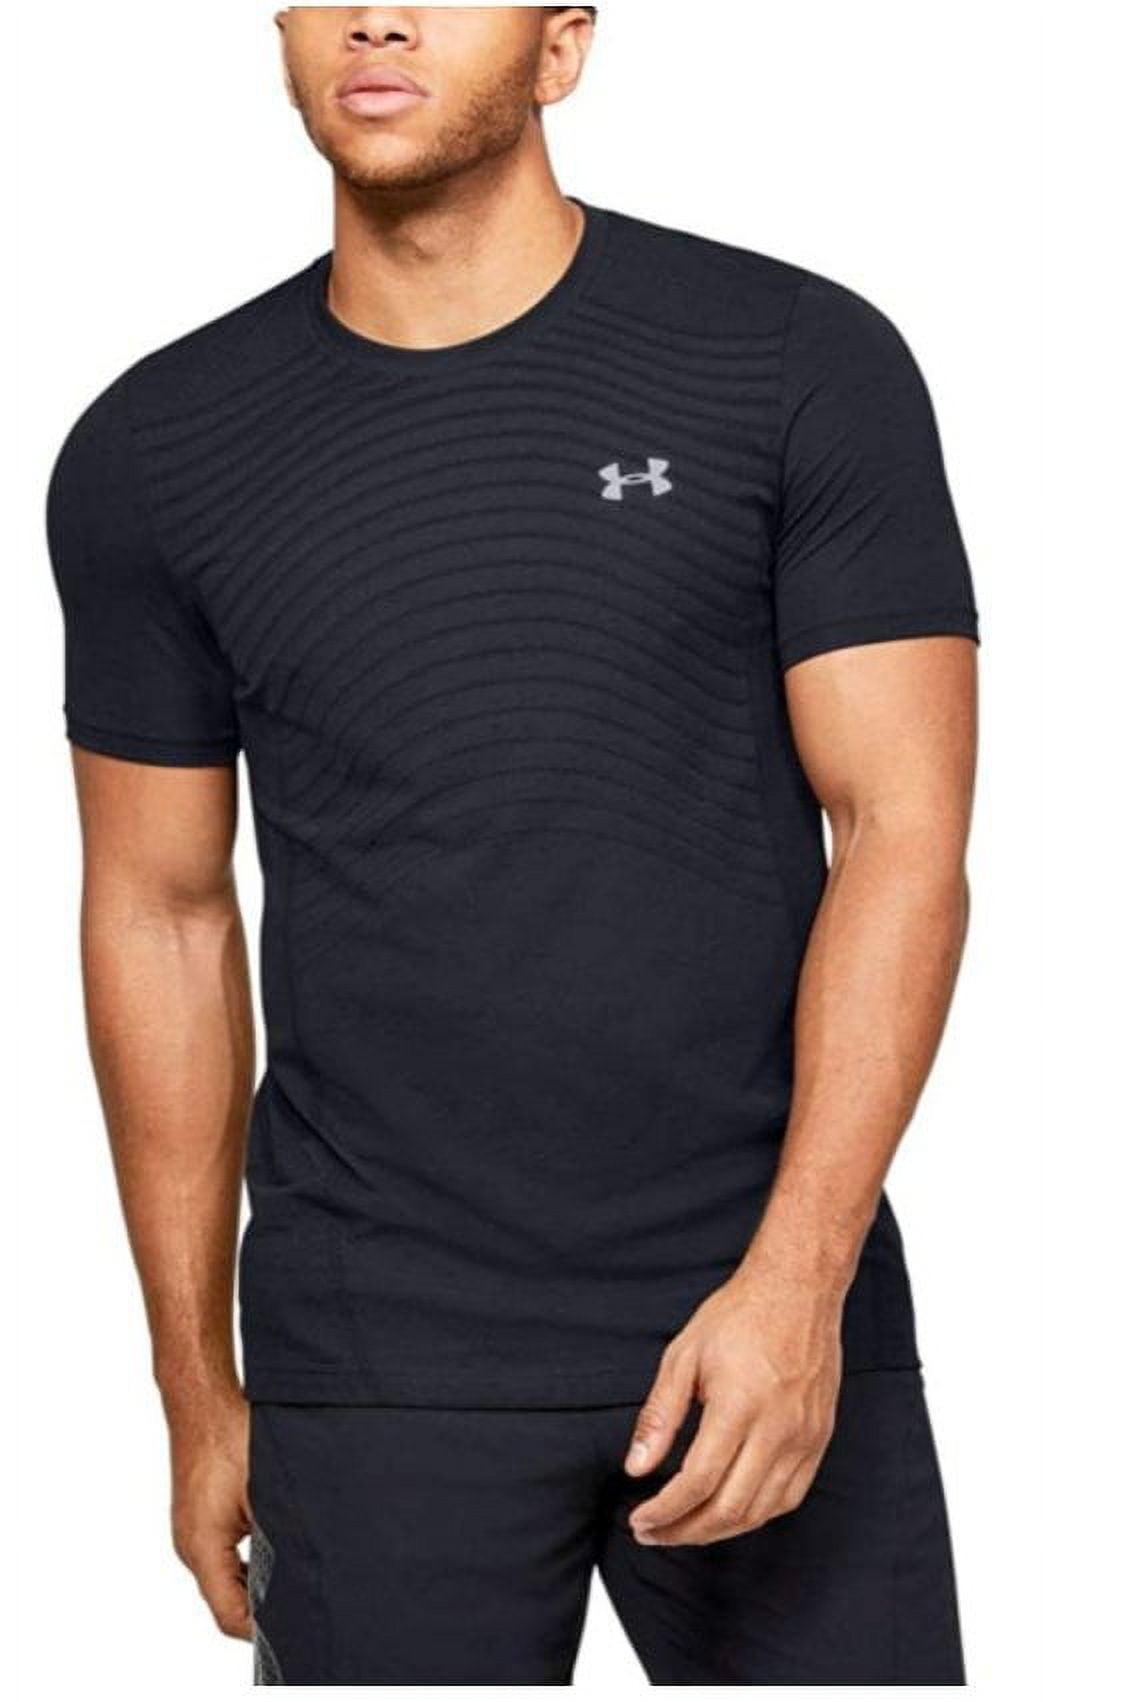 Under Armour Men's Seamless Novelty Short Sleeve T-Shirt, Black